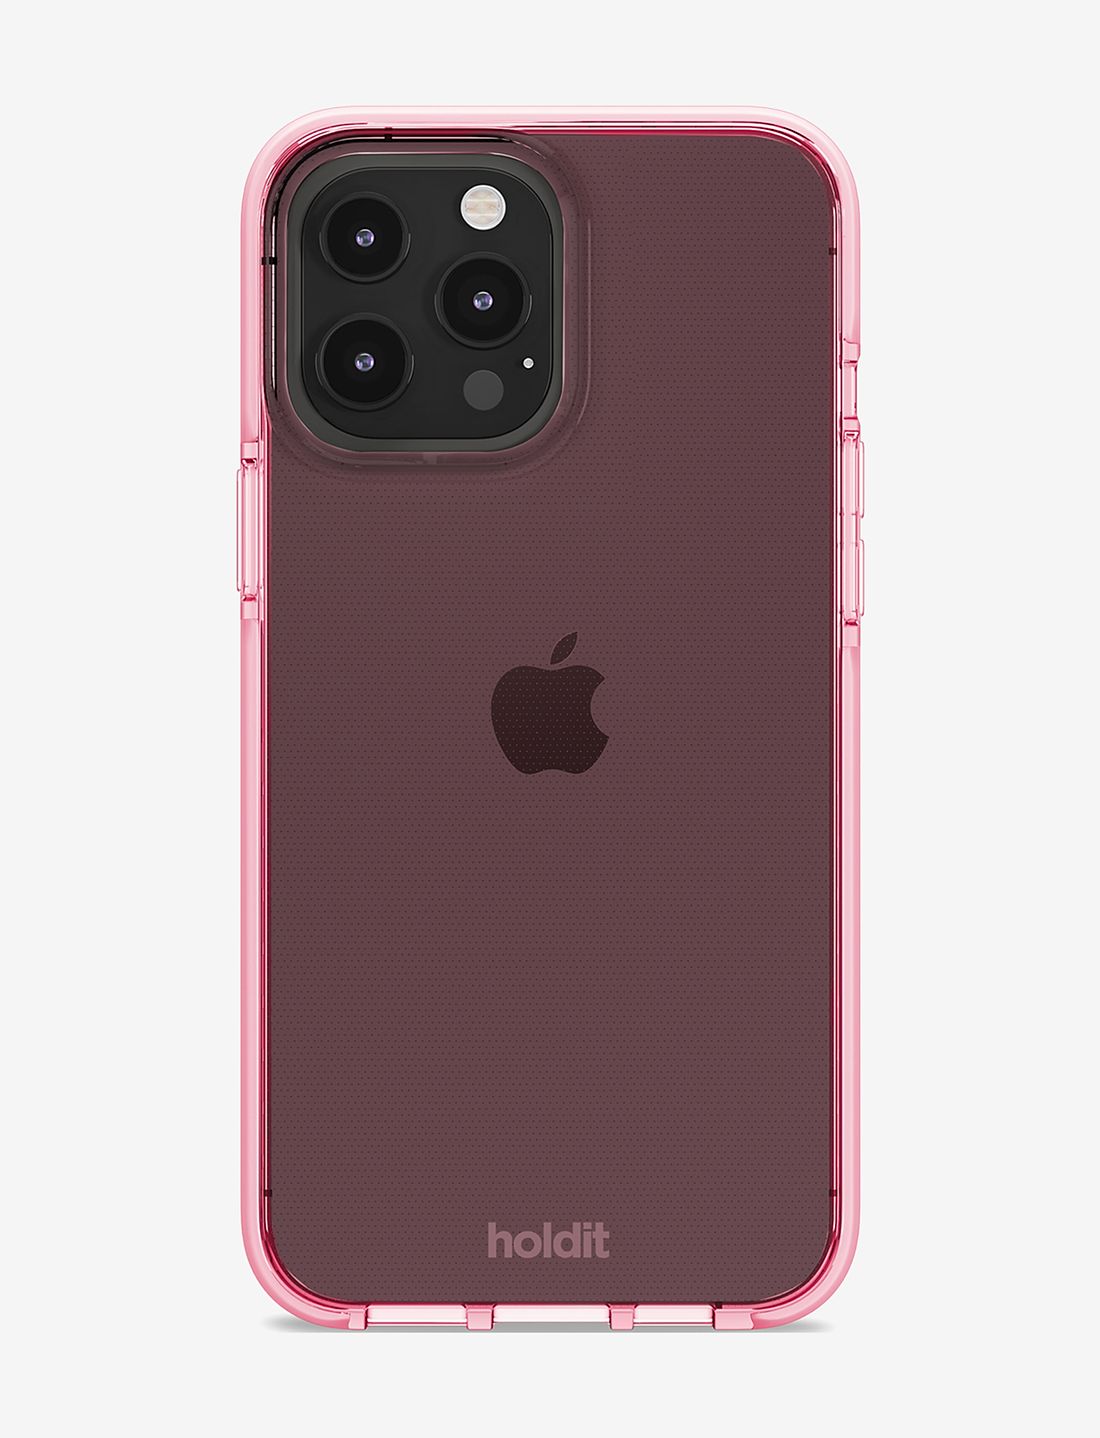 Seethru Case Iphone 12Pro Max Pink